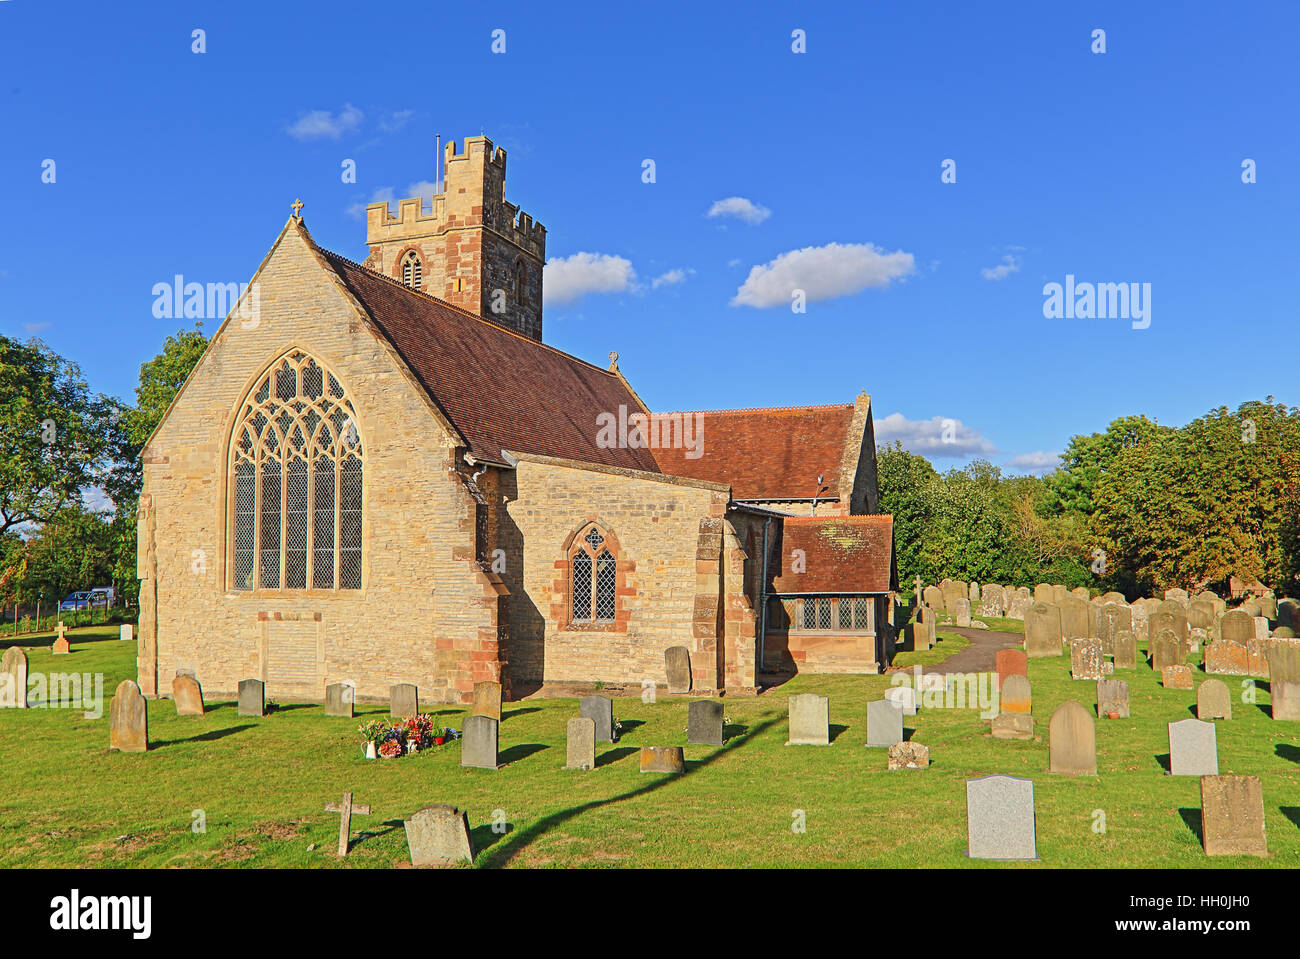 St Denys' Church, Severn Stoke, Worcestershire, England, UK. (HDR) Stock Photo